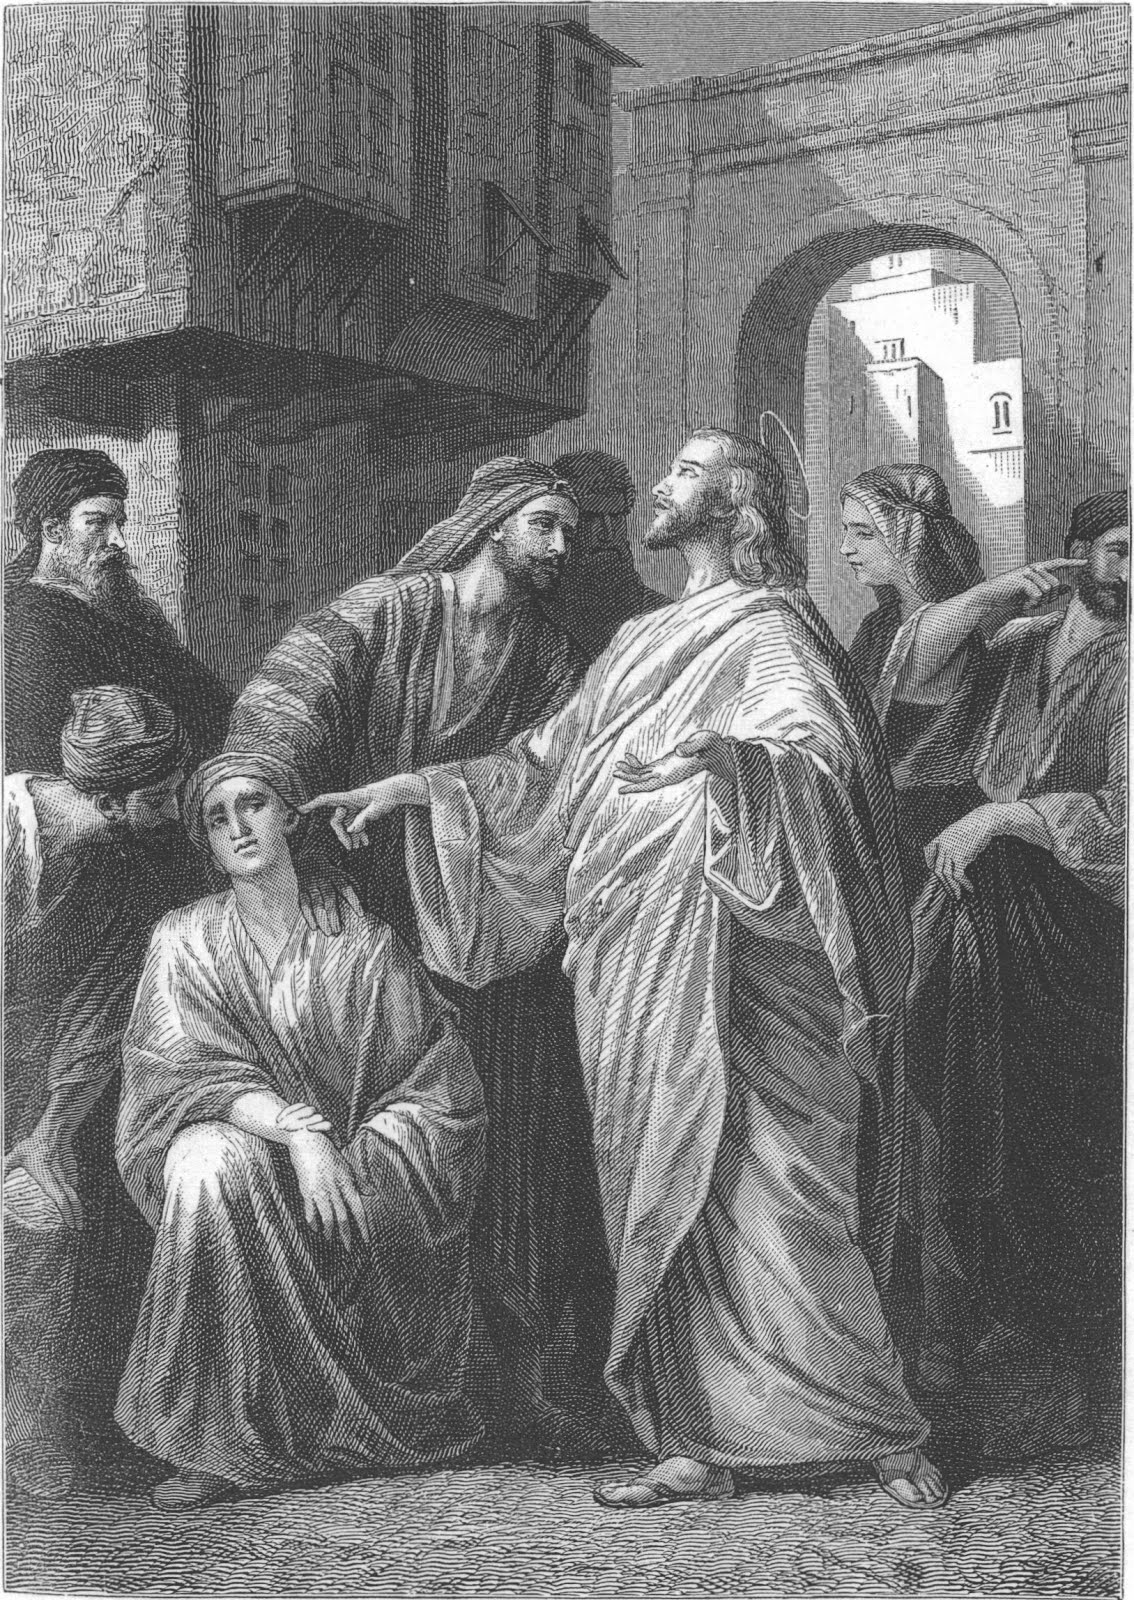 MEDIUNIDADE E JESUS (Eurípedes Barsanulfo)